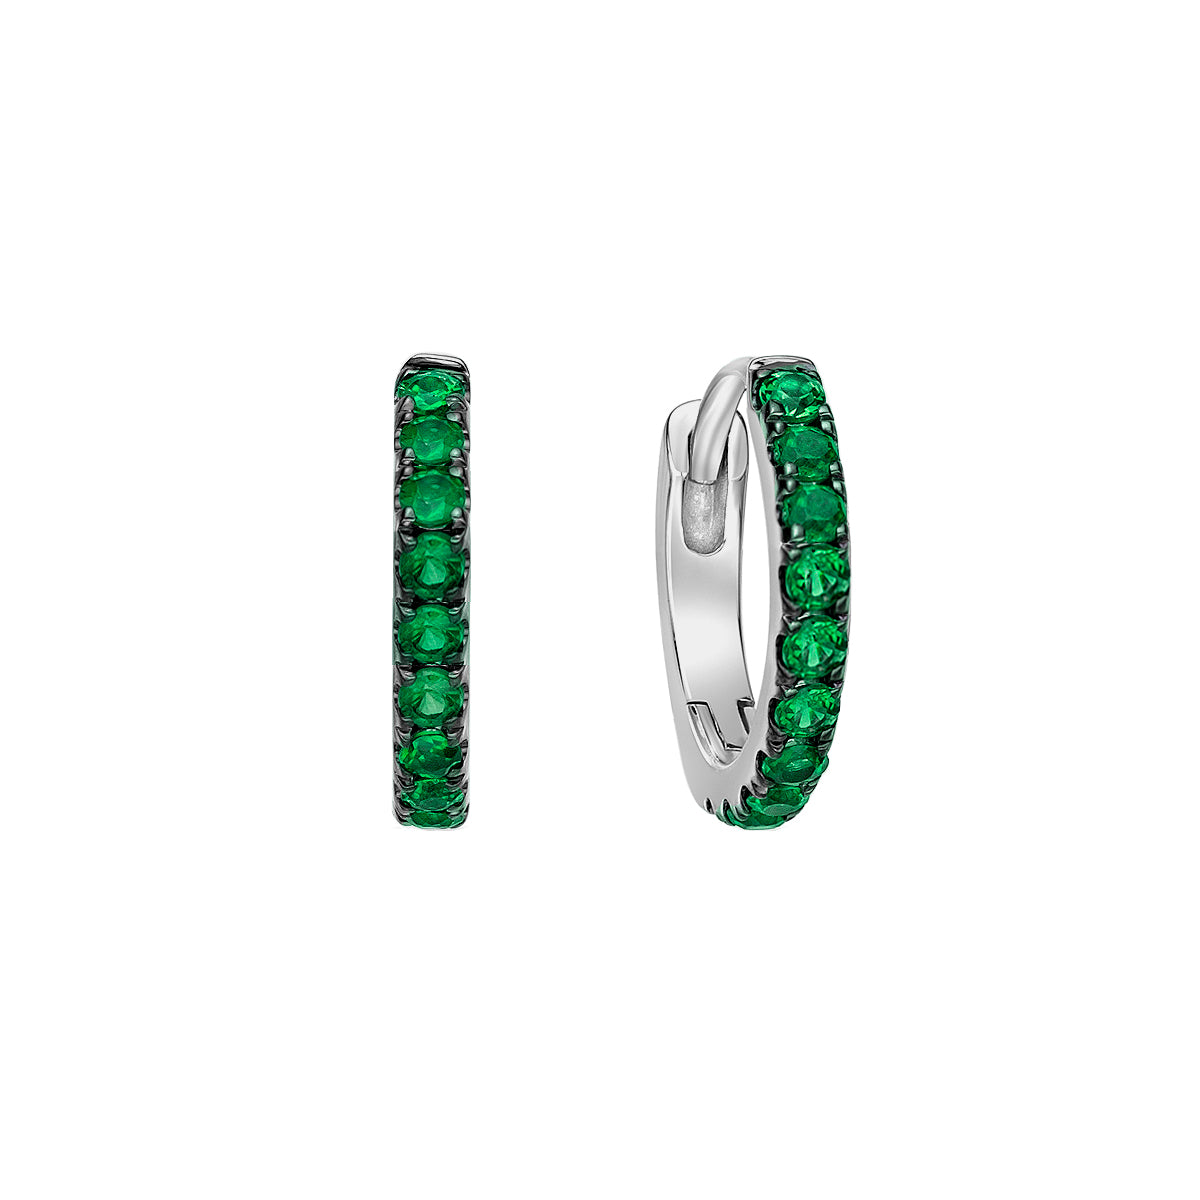 10K White Gold Classic Emerald Hoop Earrings